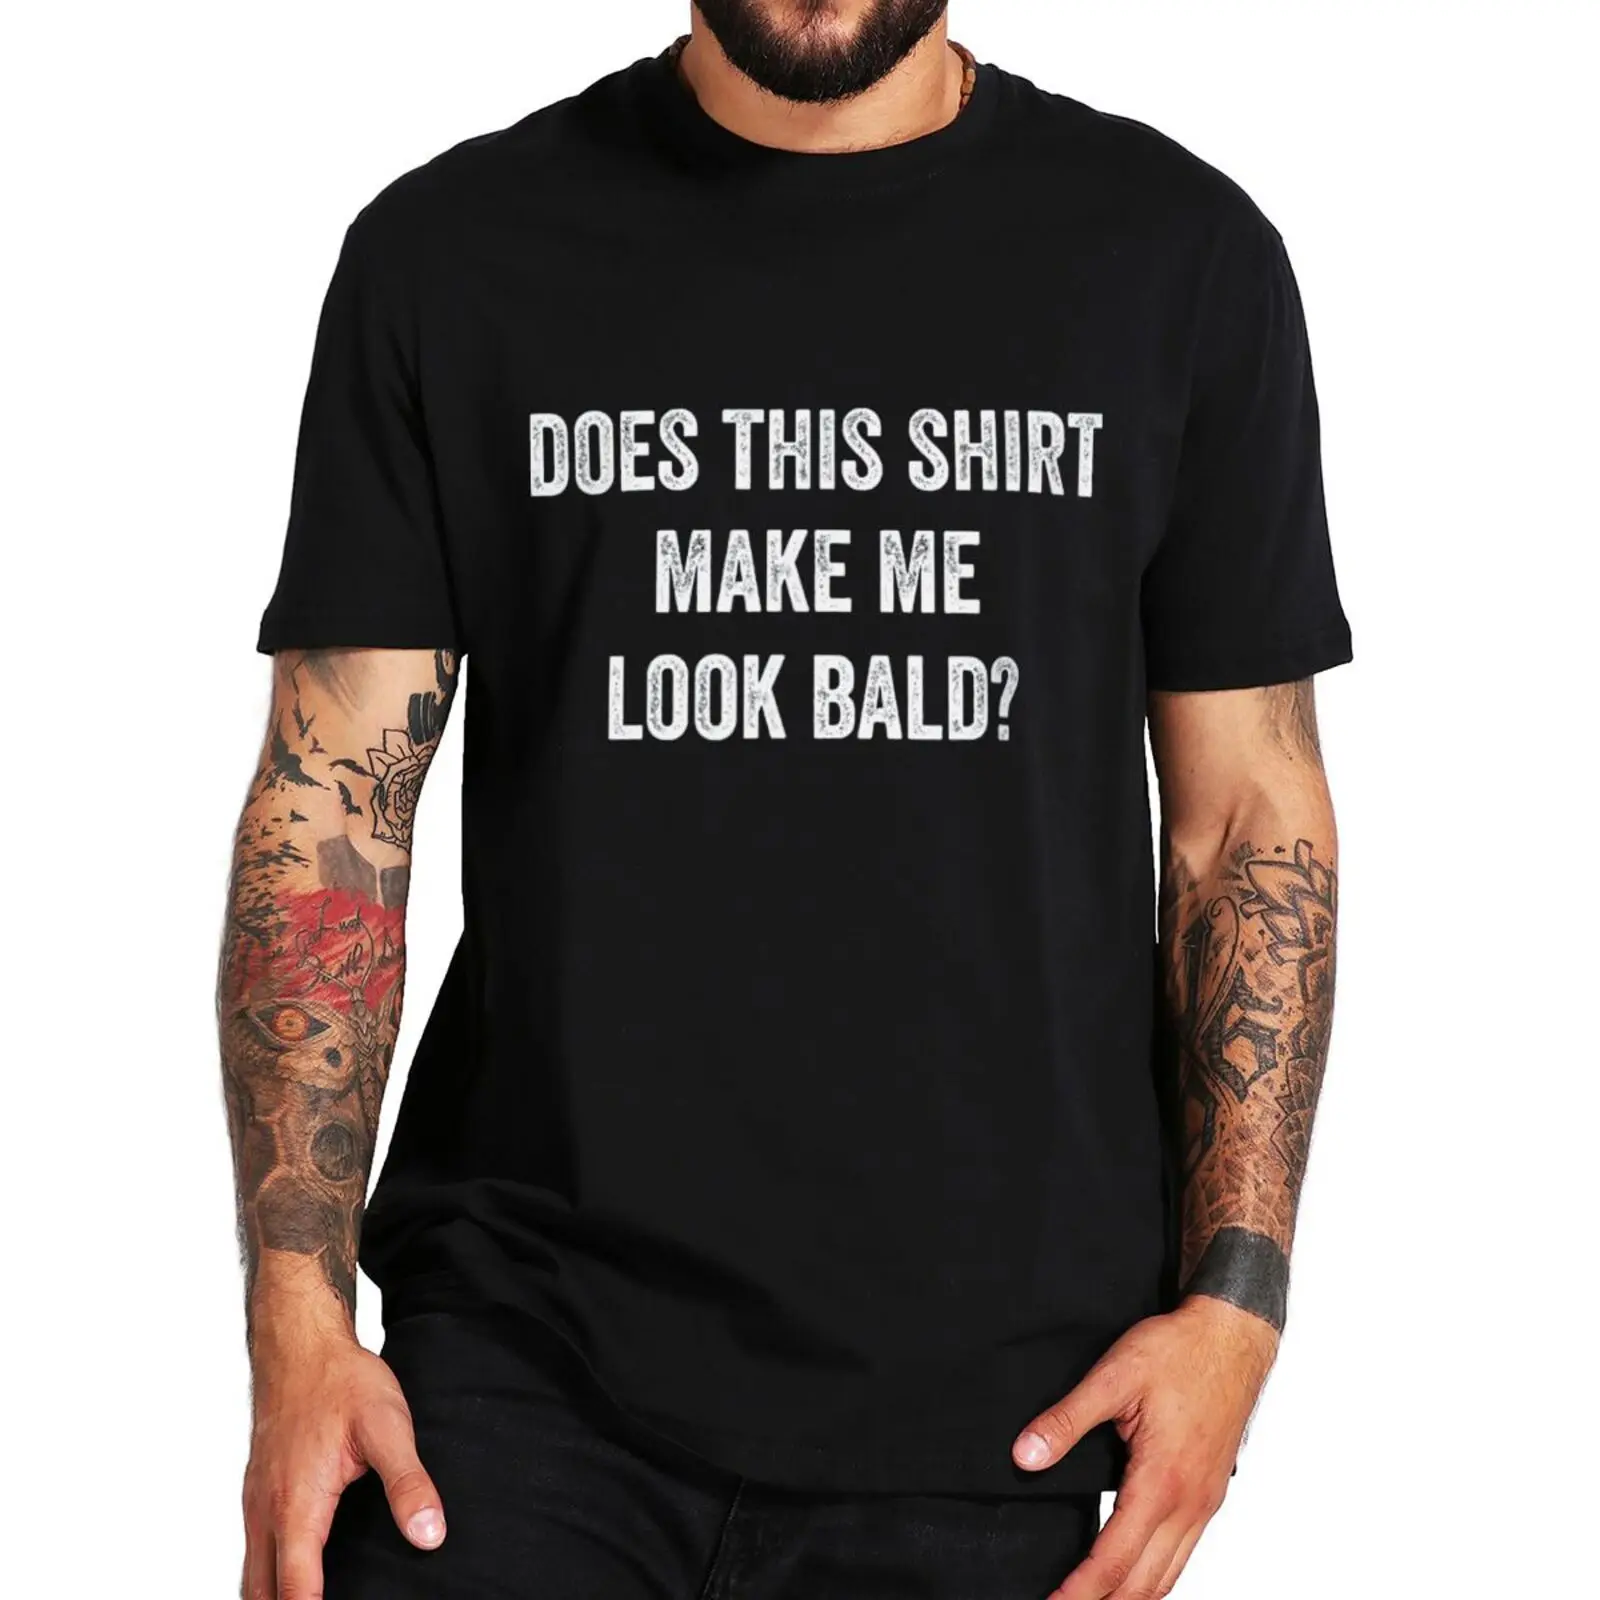 

Does This Shirt Make Me Look Bald T-shirt Funny Bald Jokes Humor Saying Tee Tops EU Size Cotton Summer Casual Men Clothing